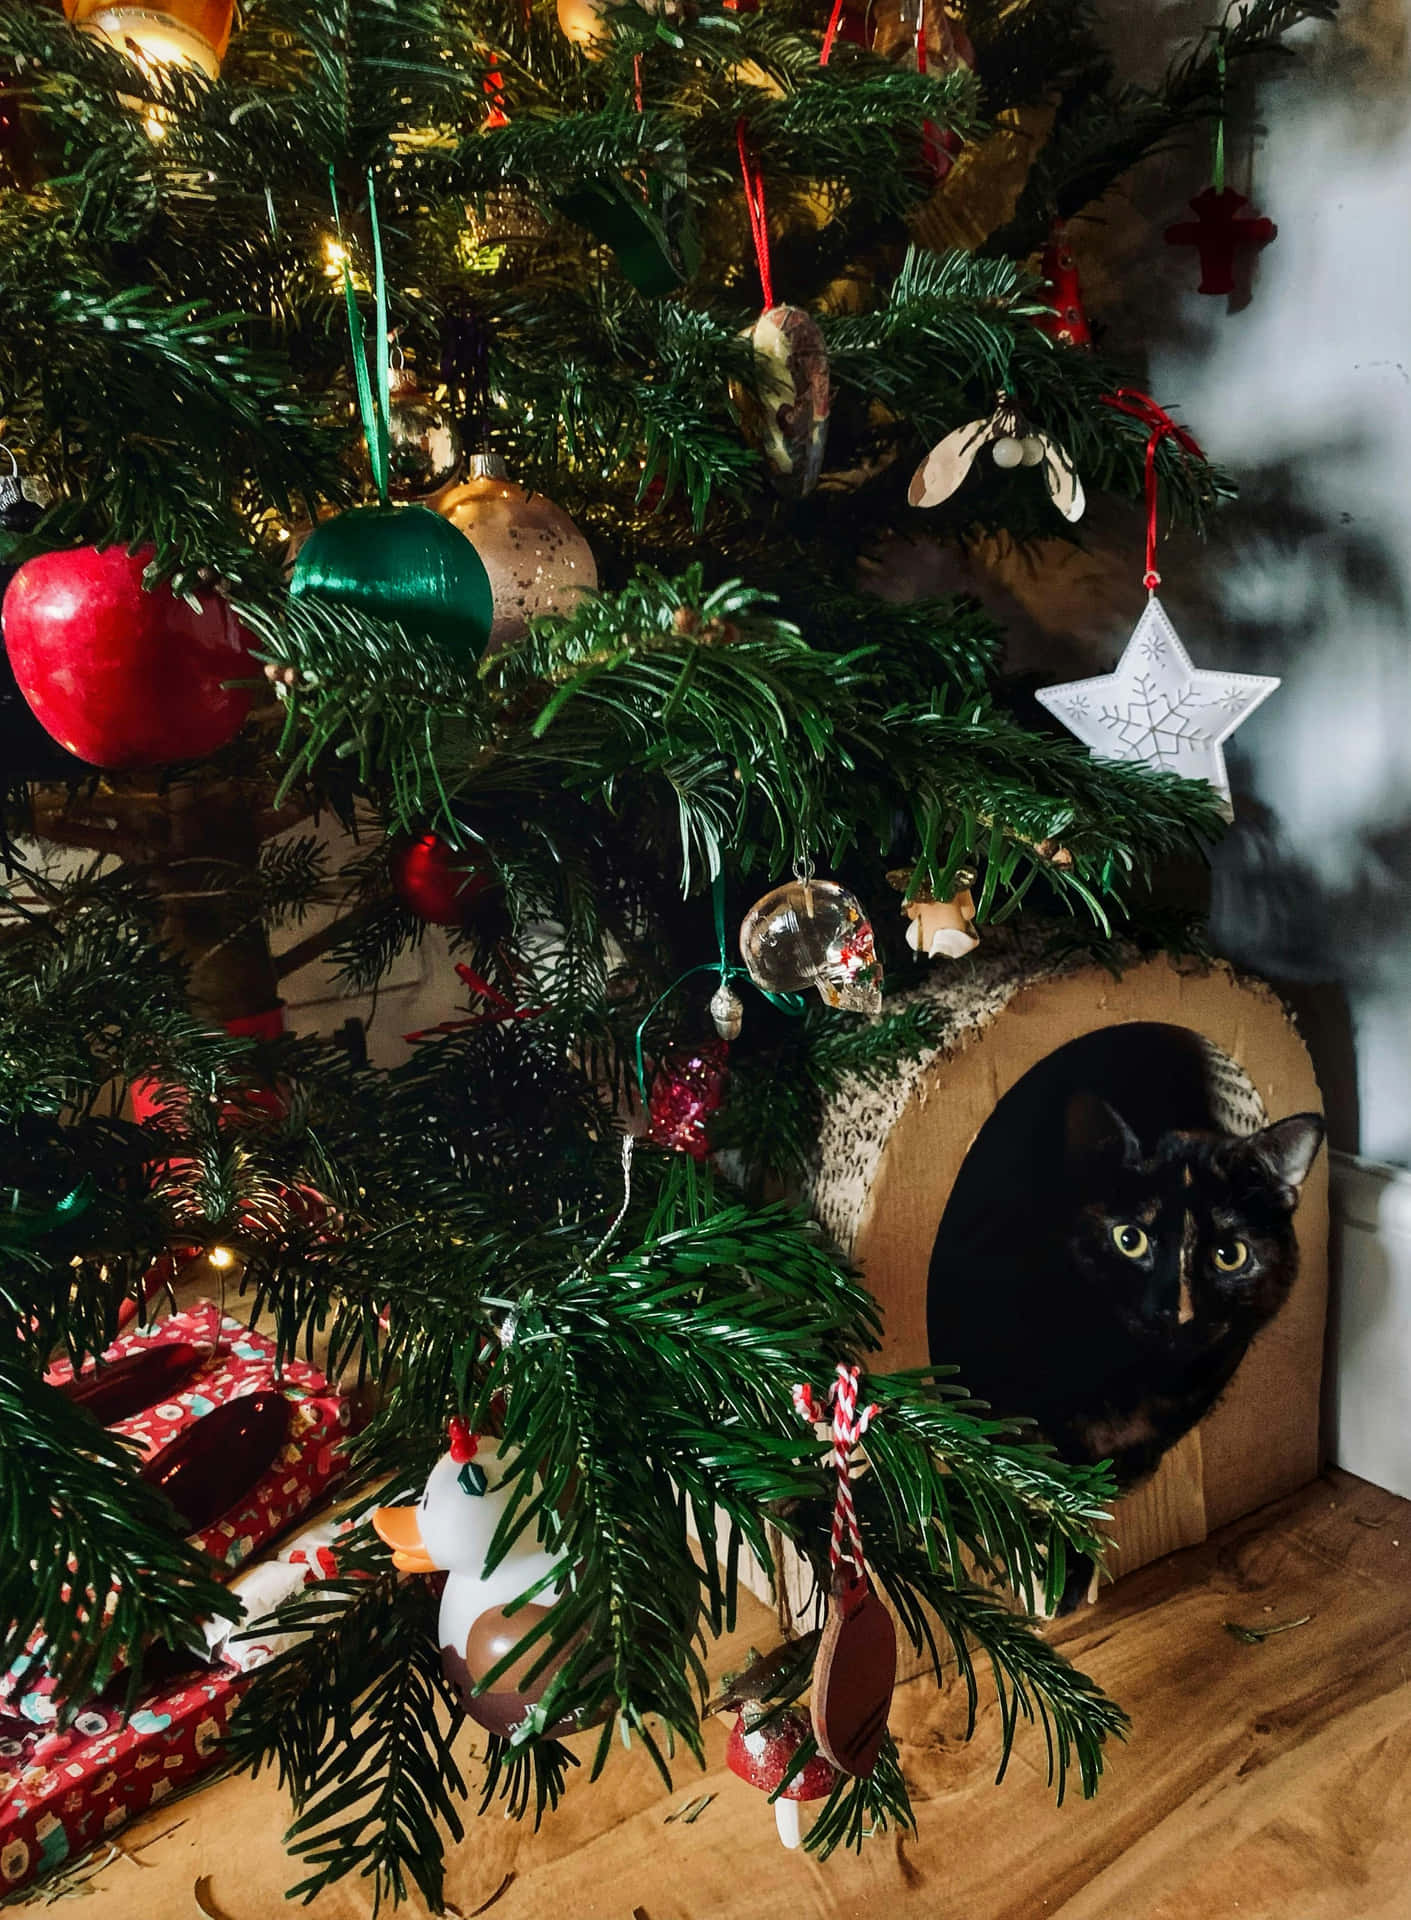 Festive Cat Under Christmas Tree.jpg Wallpaper